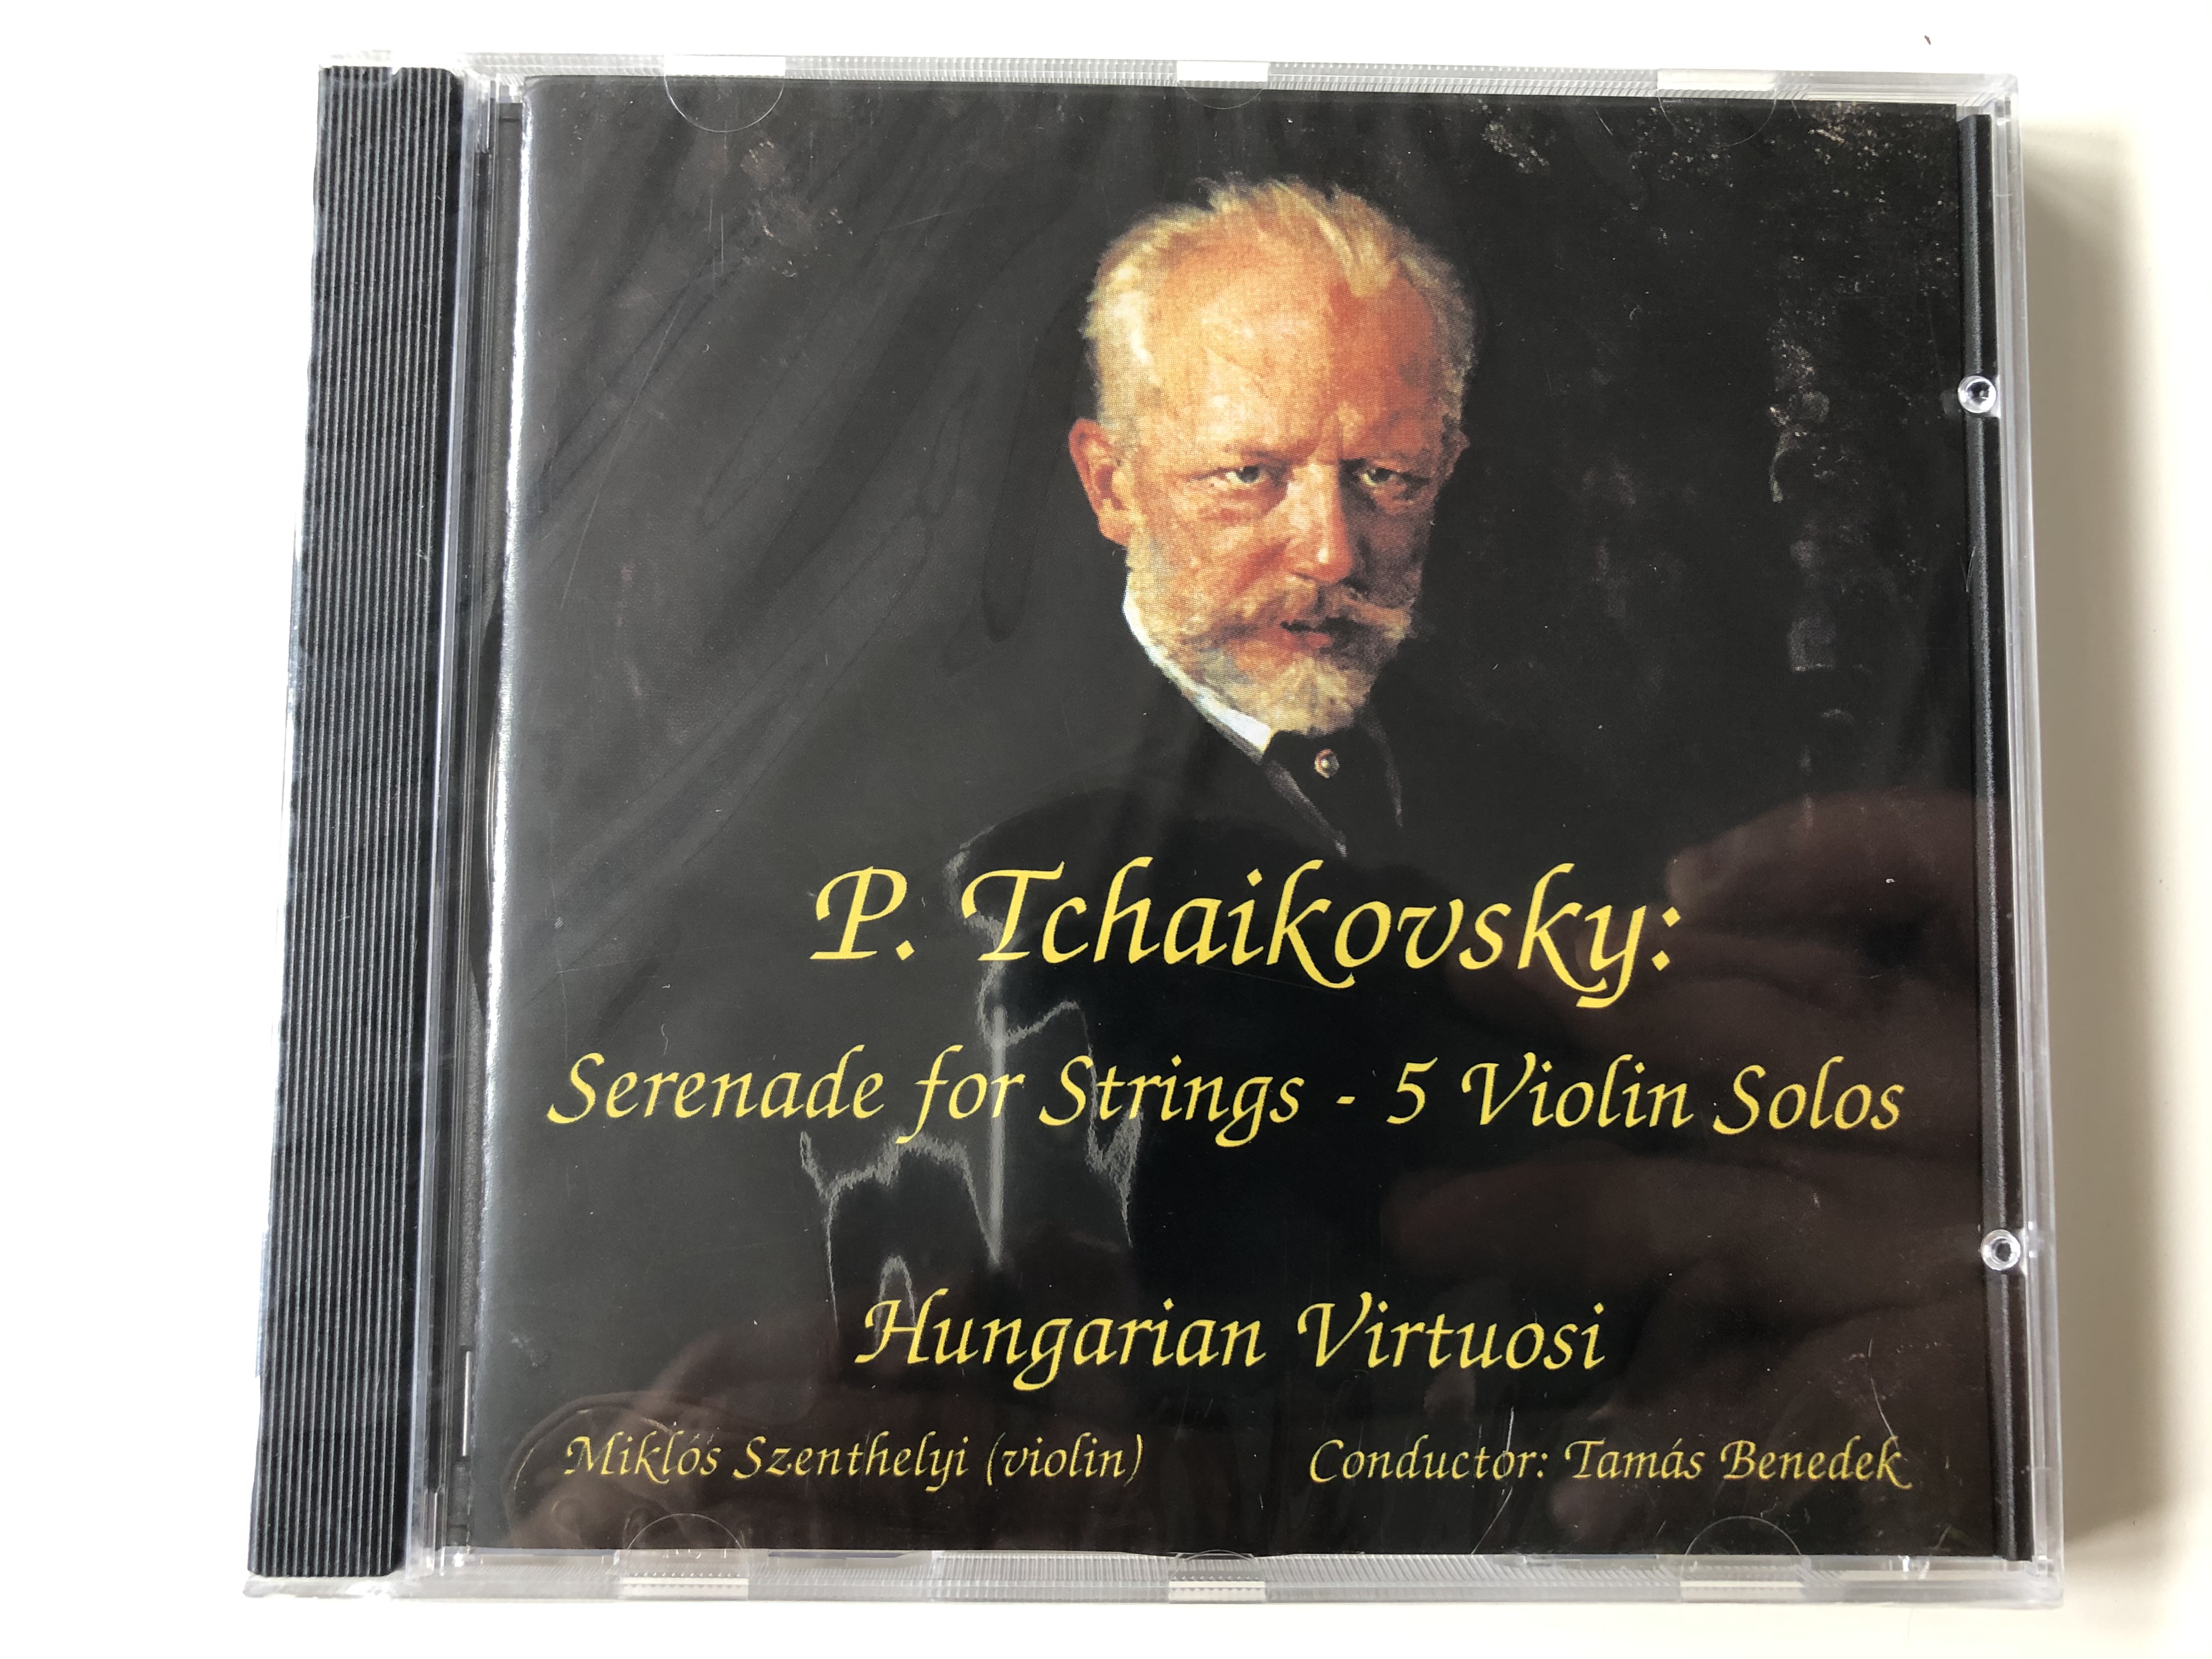 p.-tchaikovsky-serenade-for-strings-5-violin-solos-hungarian-virtuosi-miklos-szenthelyi-violin-conductor-tamas-benedek-alpha-line-recording-audio-cd-swcd-6201-1-.jpg